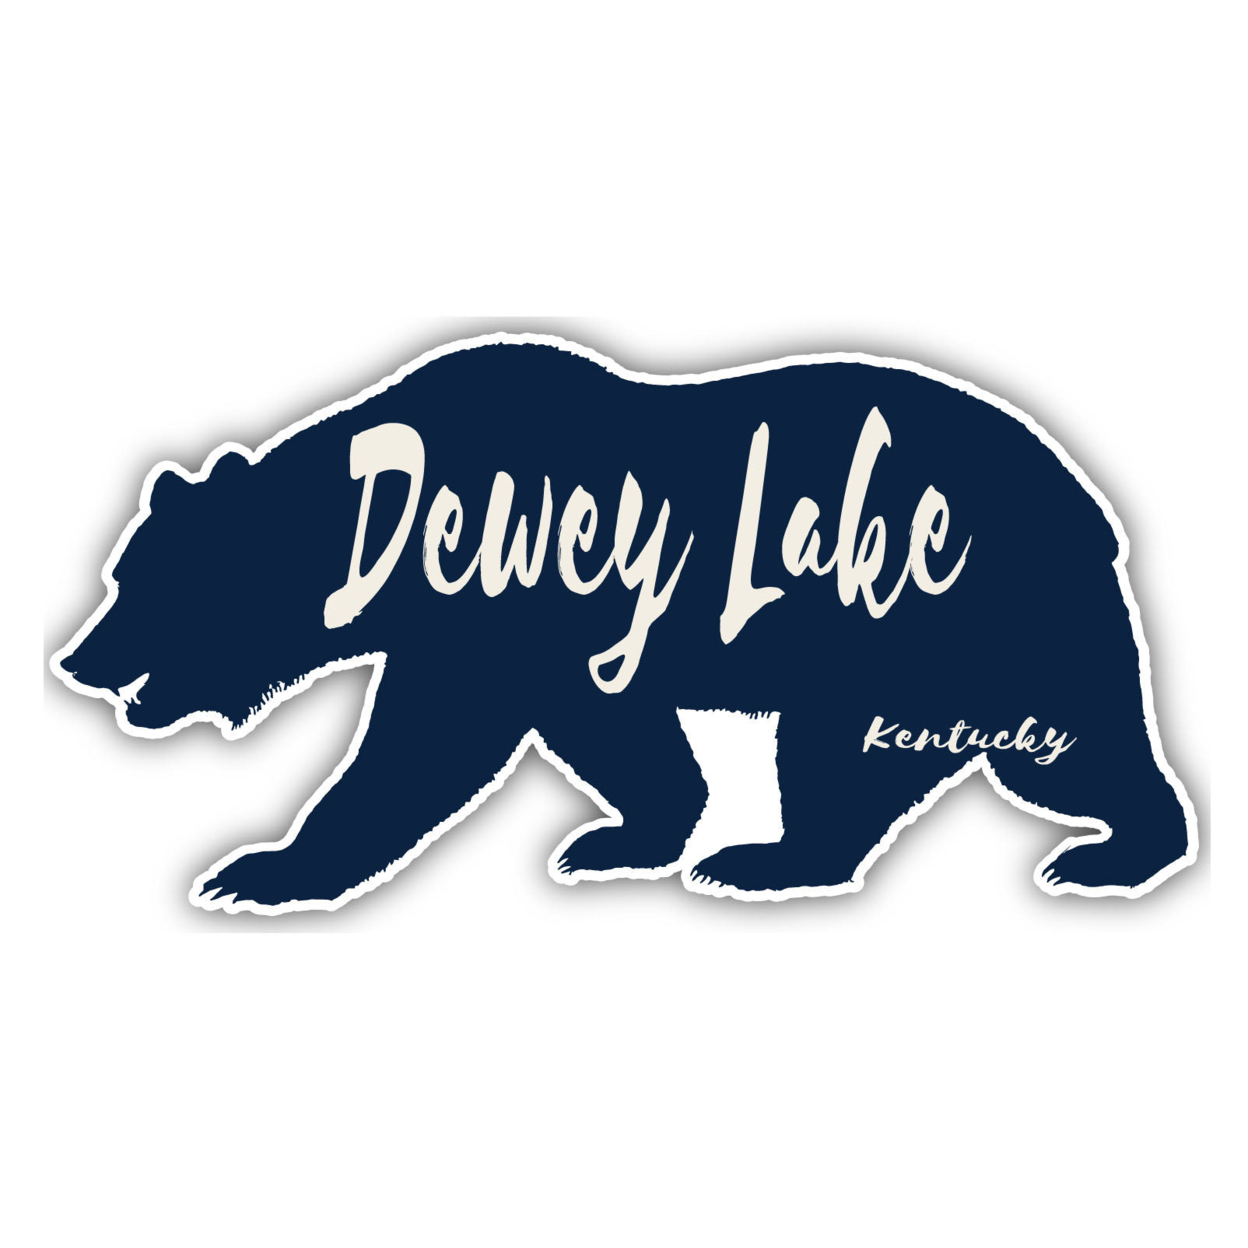 Dewey Lake Kentucky Souvenir Decorative Stickers (Choose Theme And Size) - 4-Pack, 10-Inch, Bear